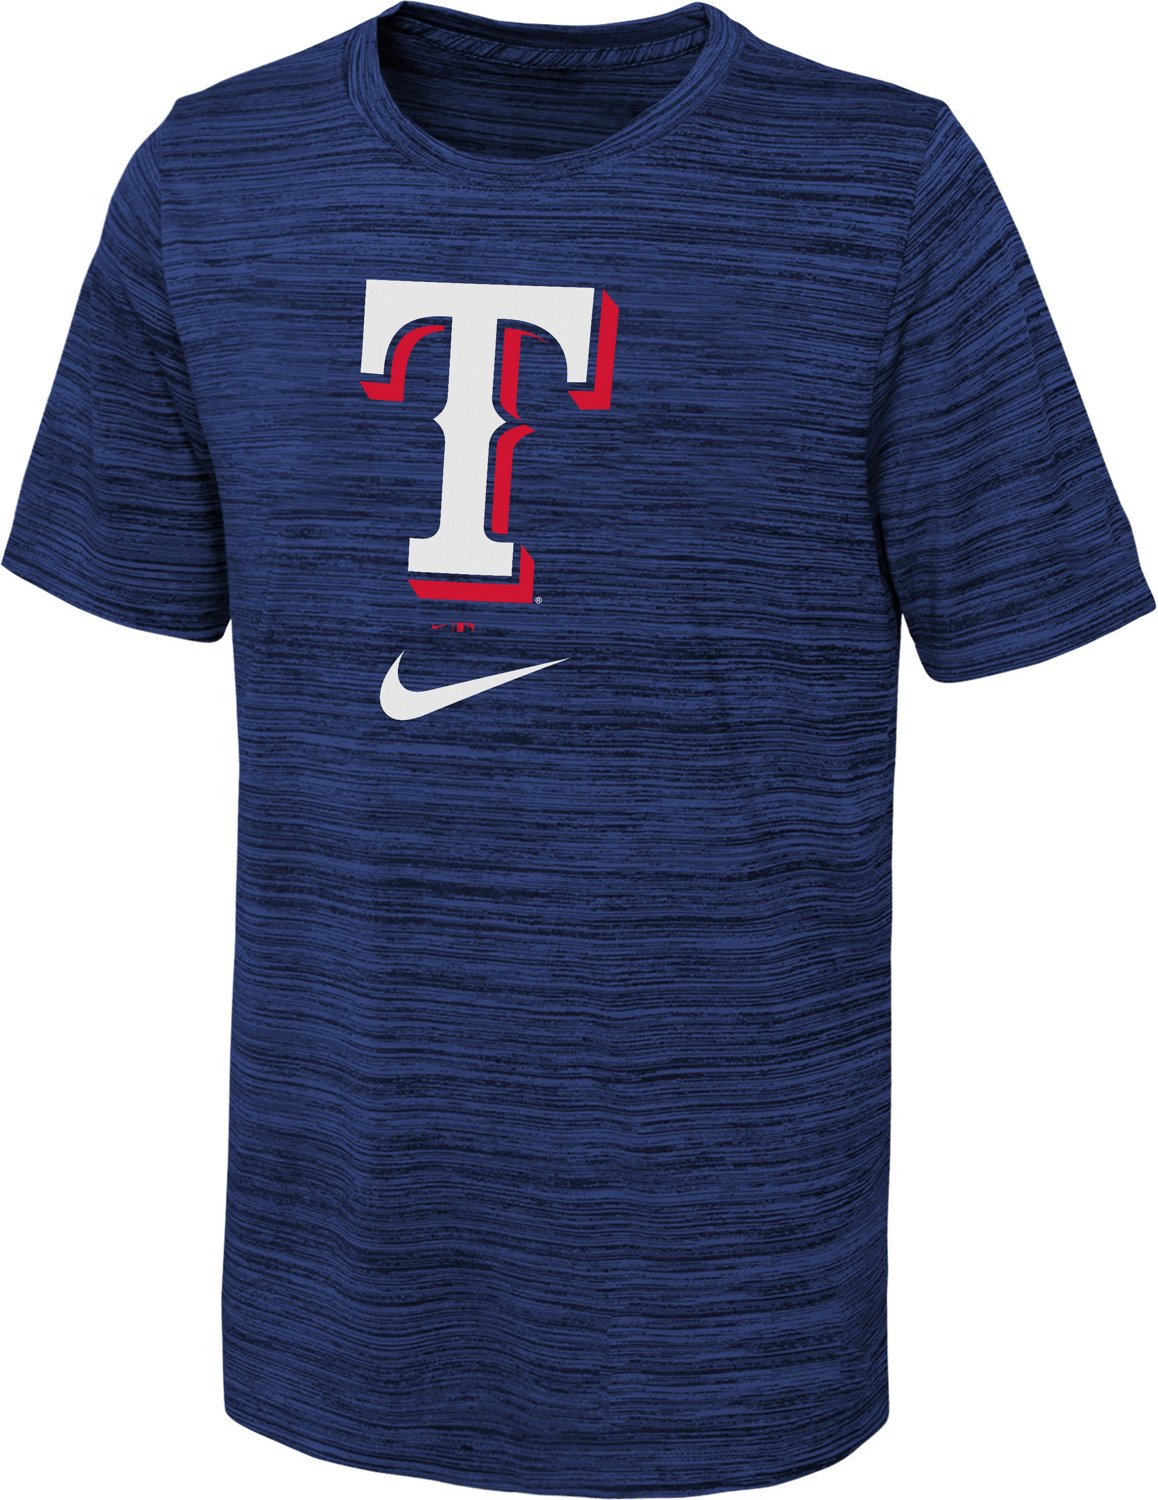 Texas Rangers wear Dallas Cowboys-themed jerseys